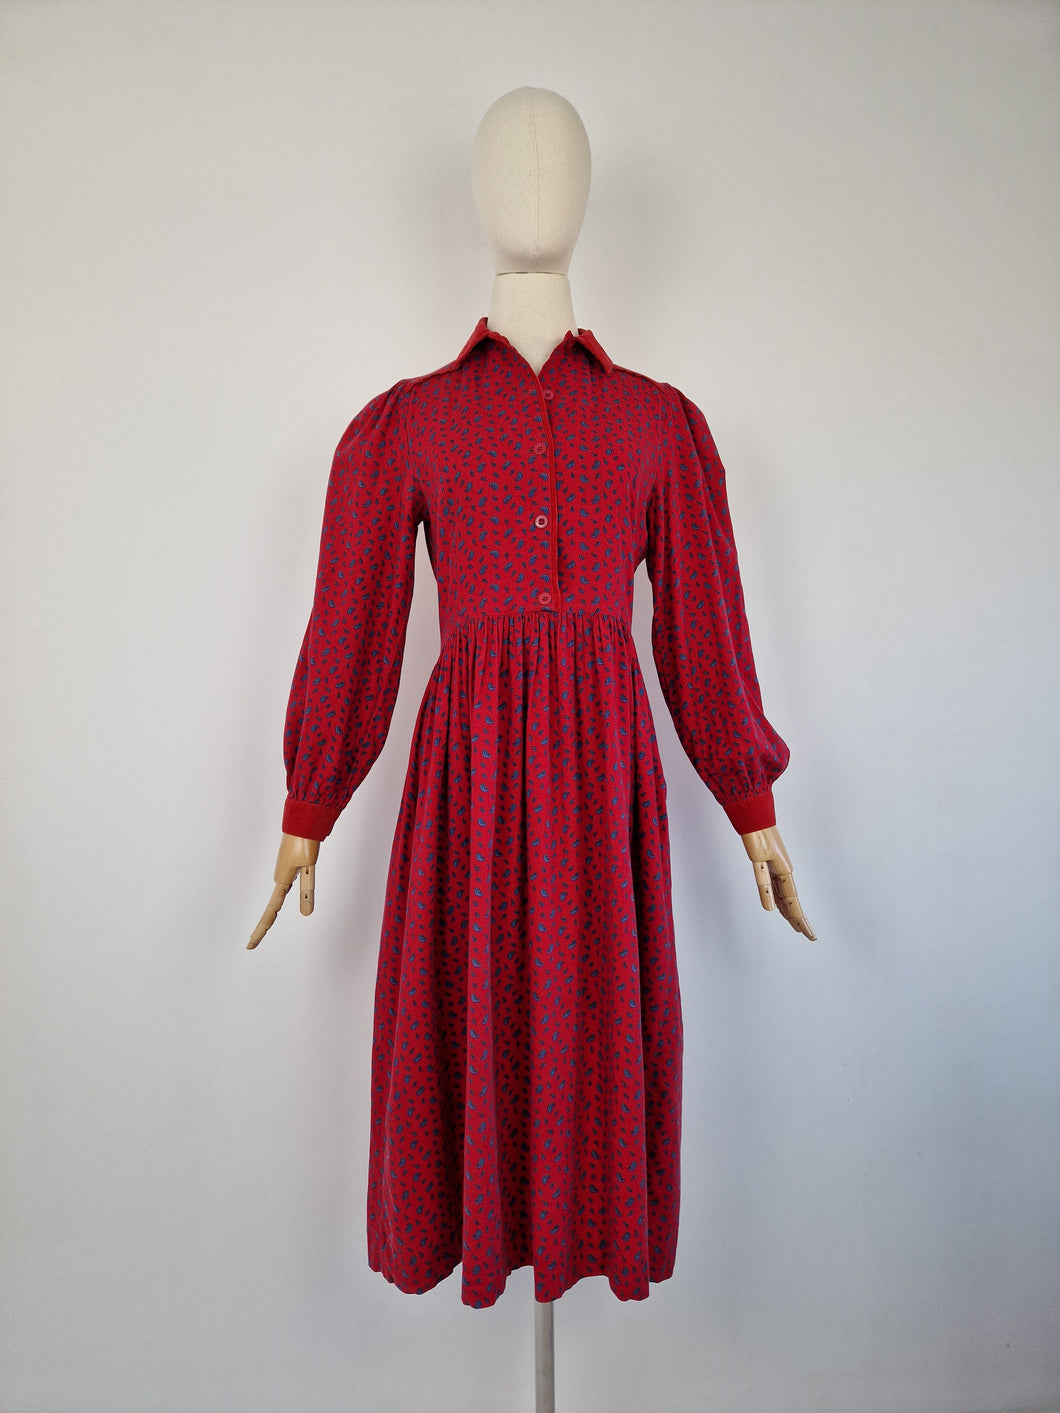 Vintage 80s Laura Ashley prairie dress